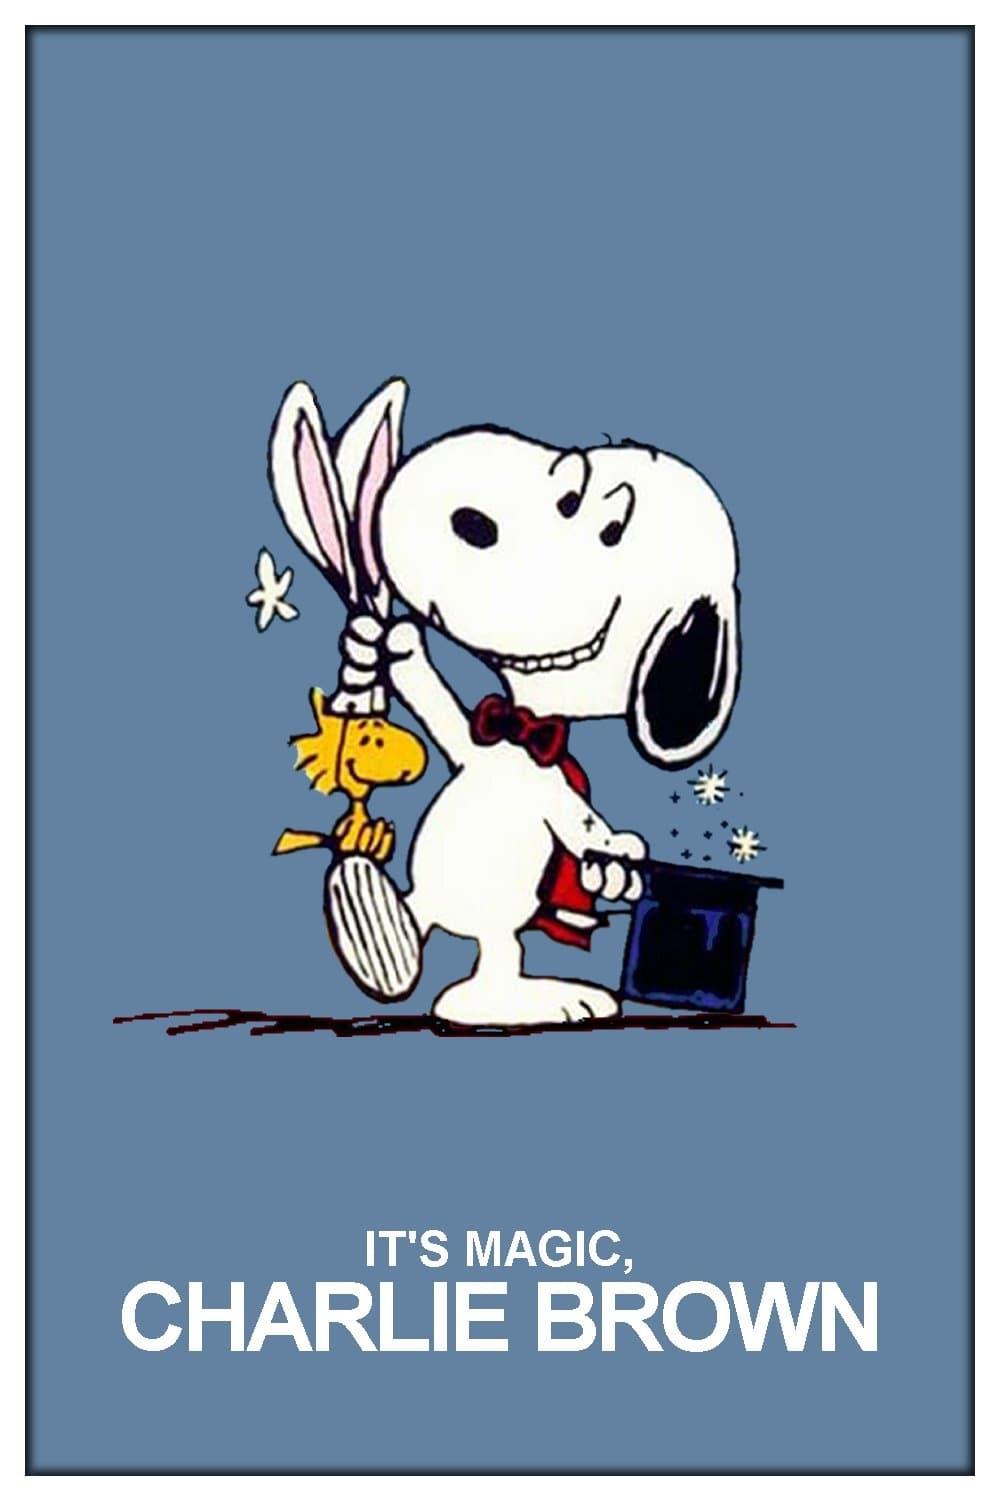 It's Magic, Charlie Brown poster